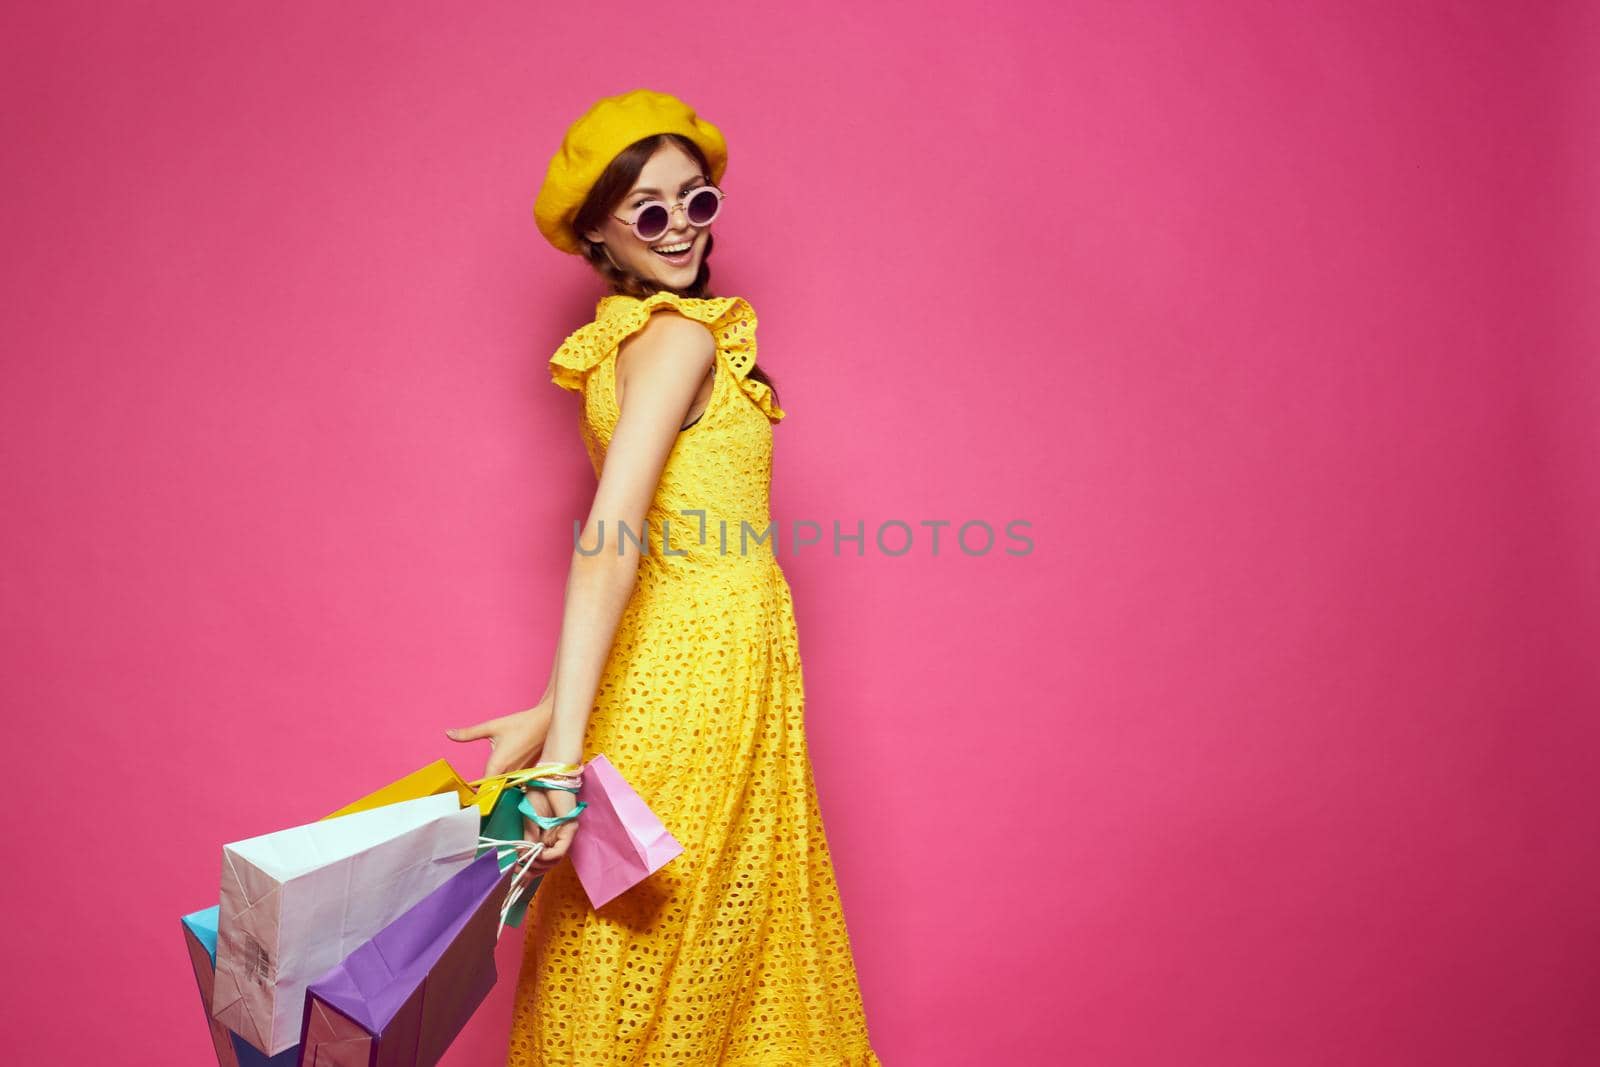 glamorous woman in a yellow hat Shopaholic fashion style pink background by Vichizh